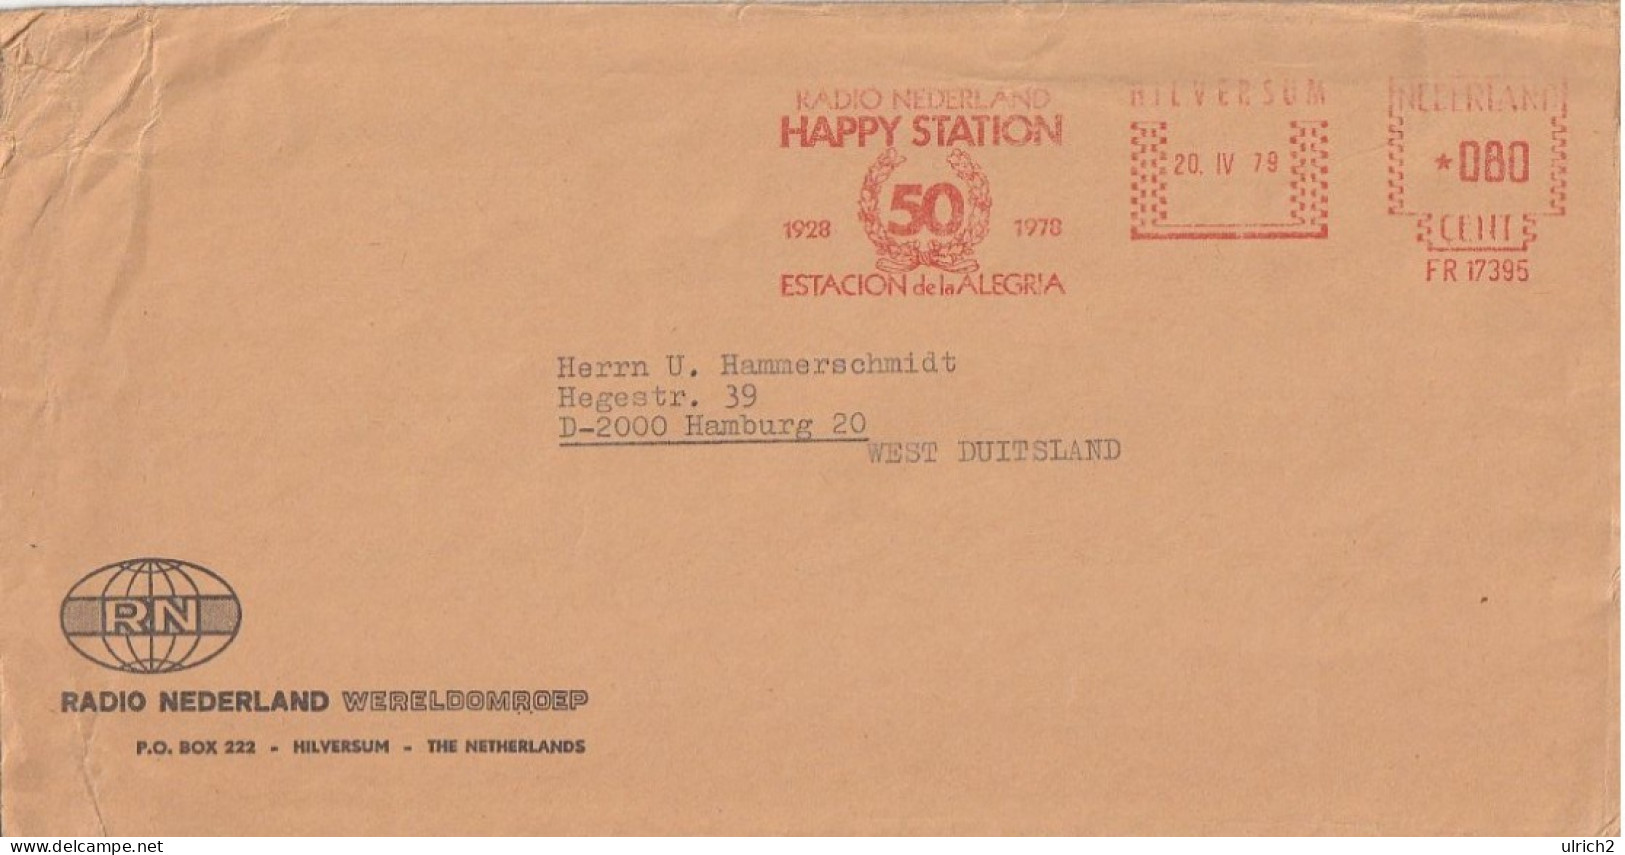 Netherlands - Radio Nederland Happy Station 50 Years - 1979 (67147) - Cartas & Documentos